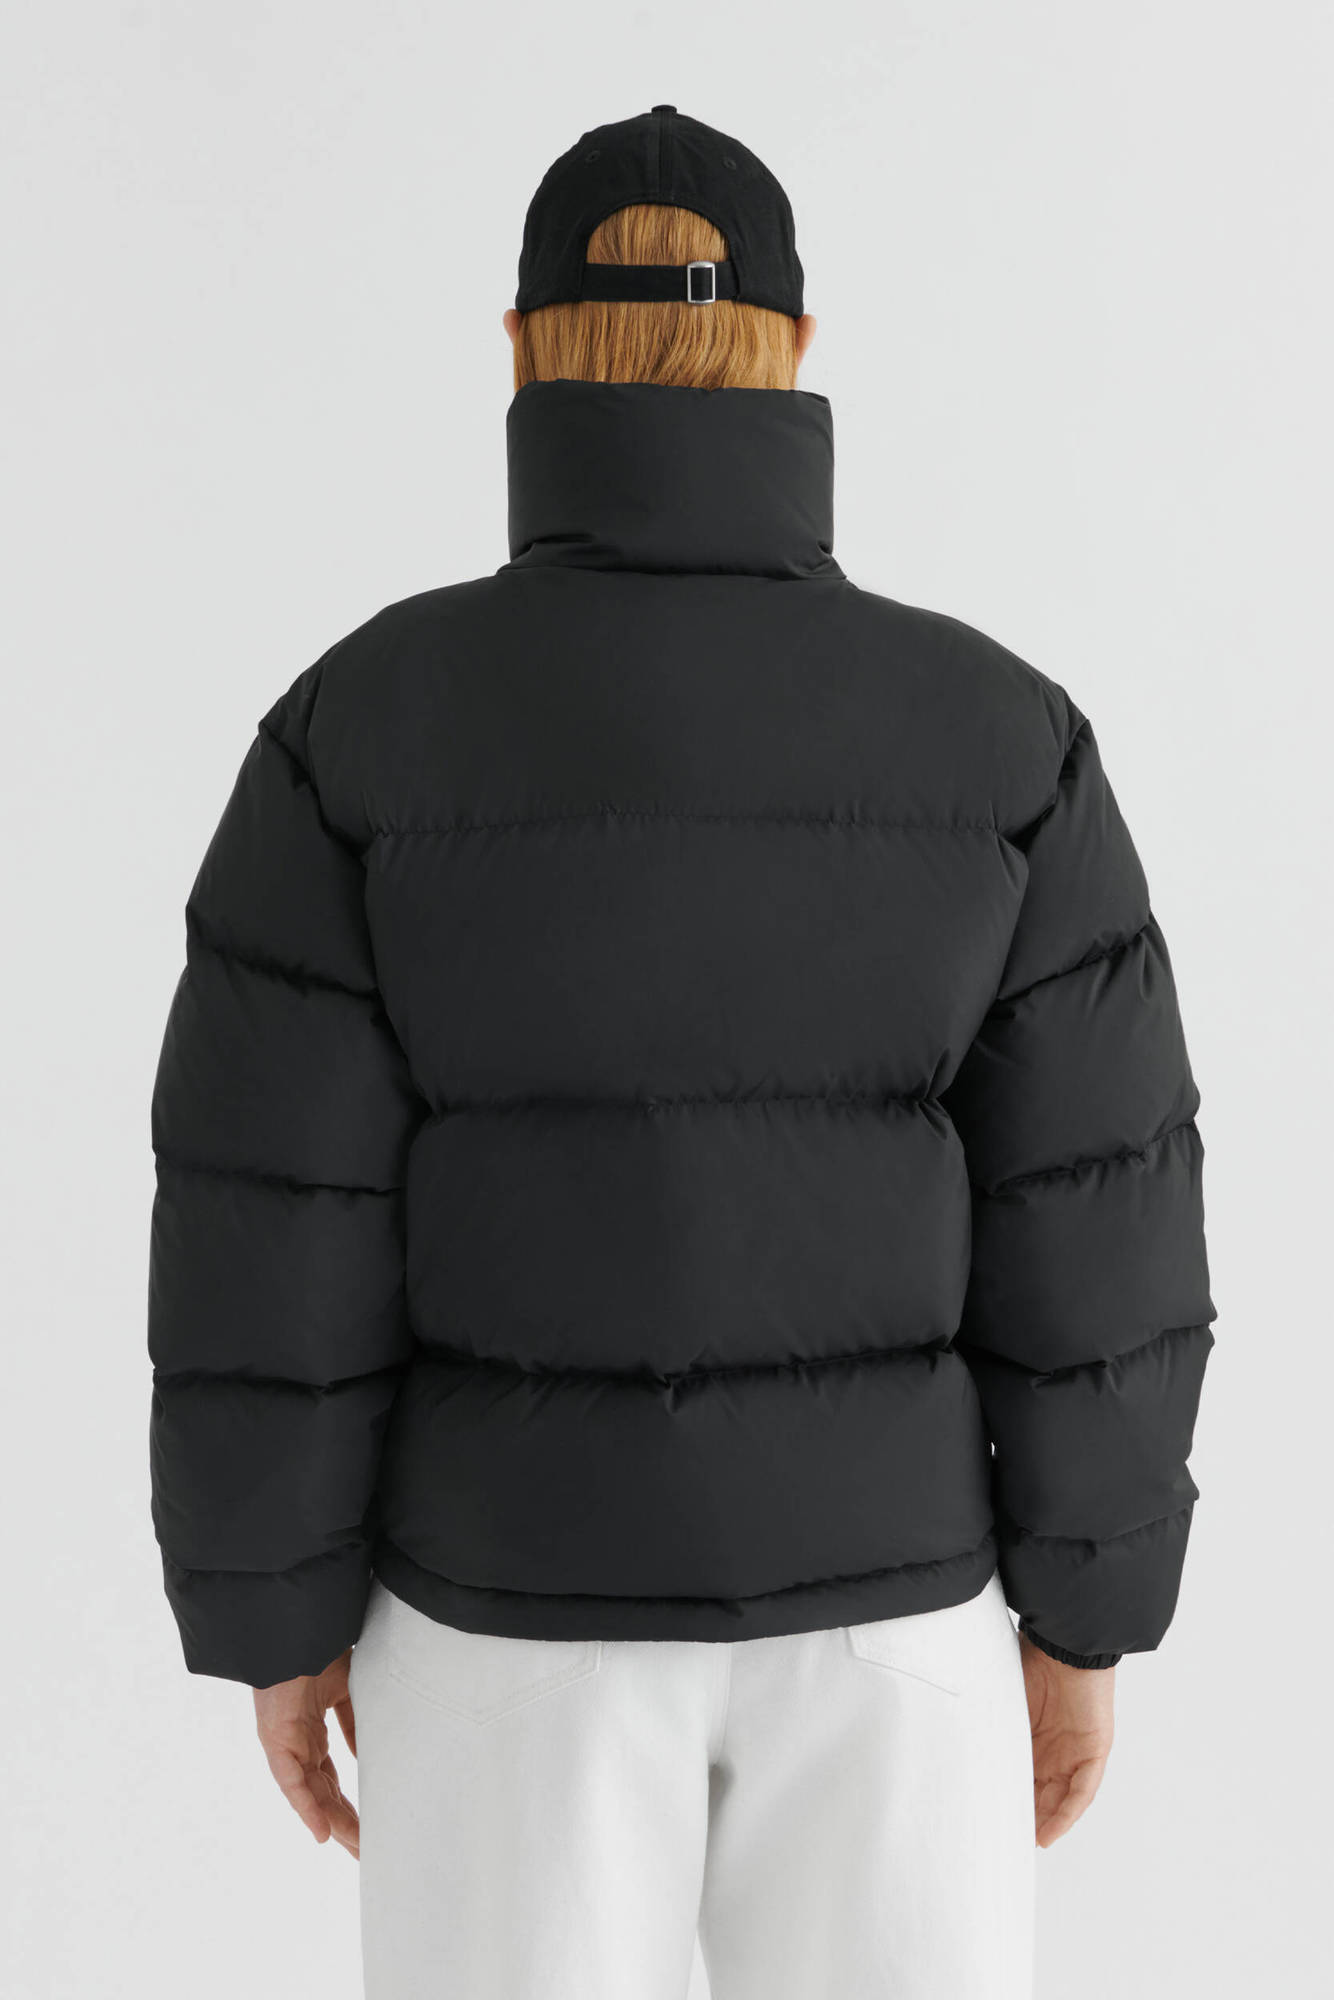 AXEL ARIGATO Observer Puffer Jacket in Black XS